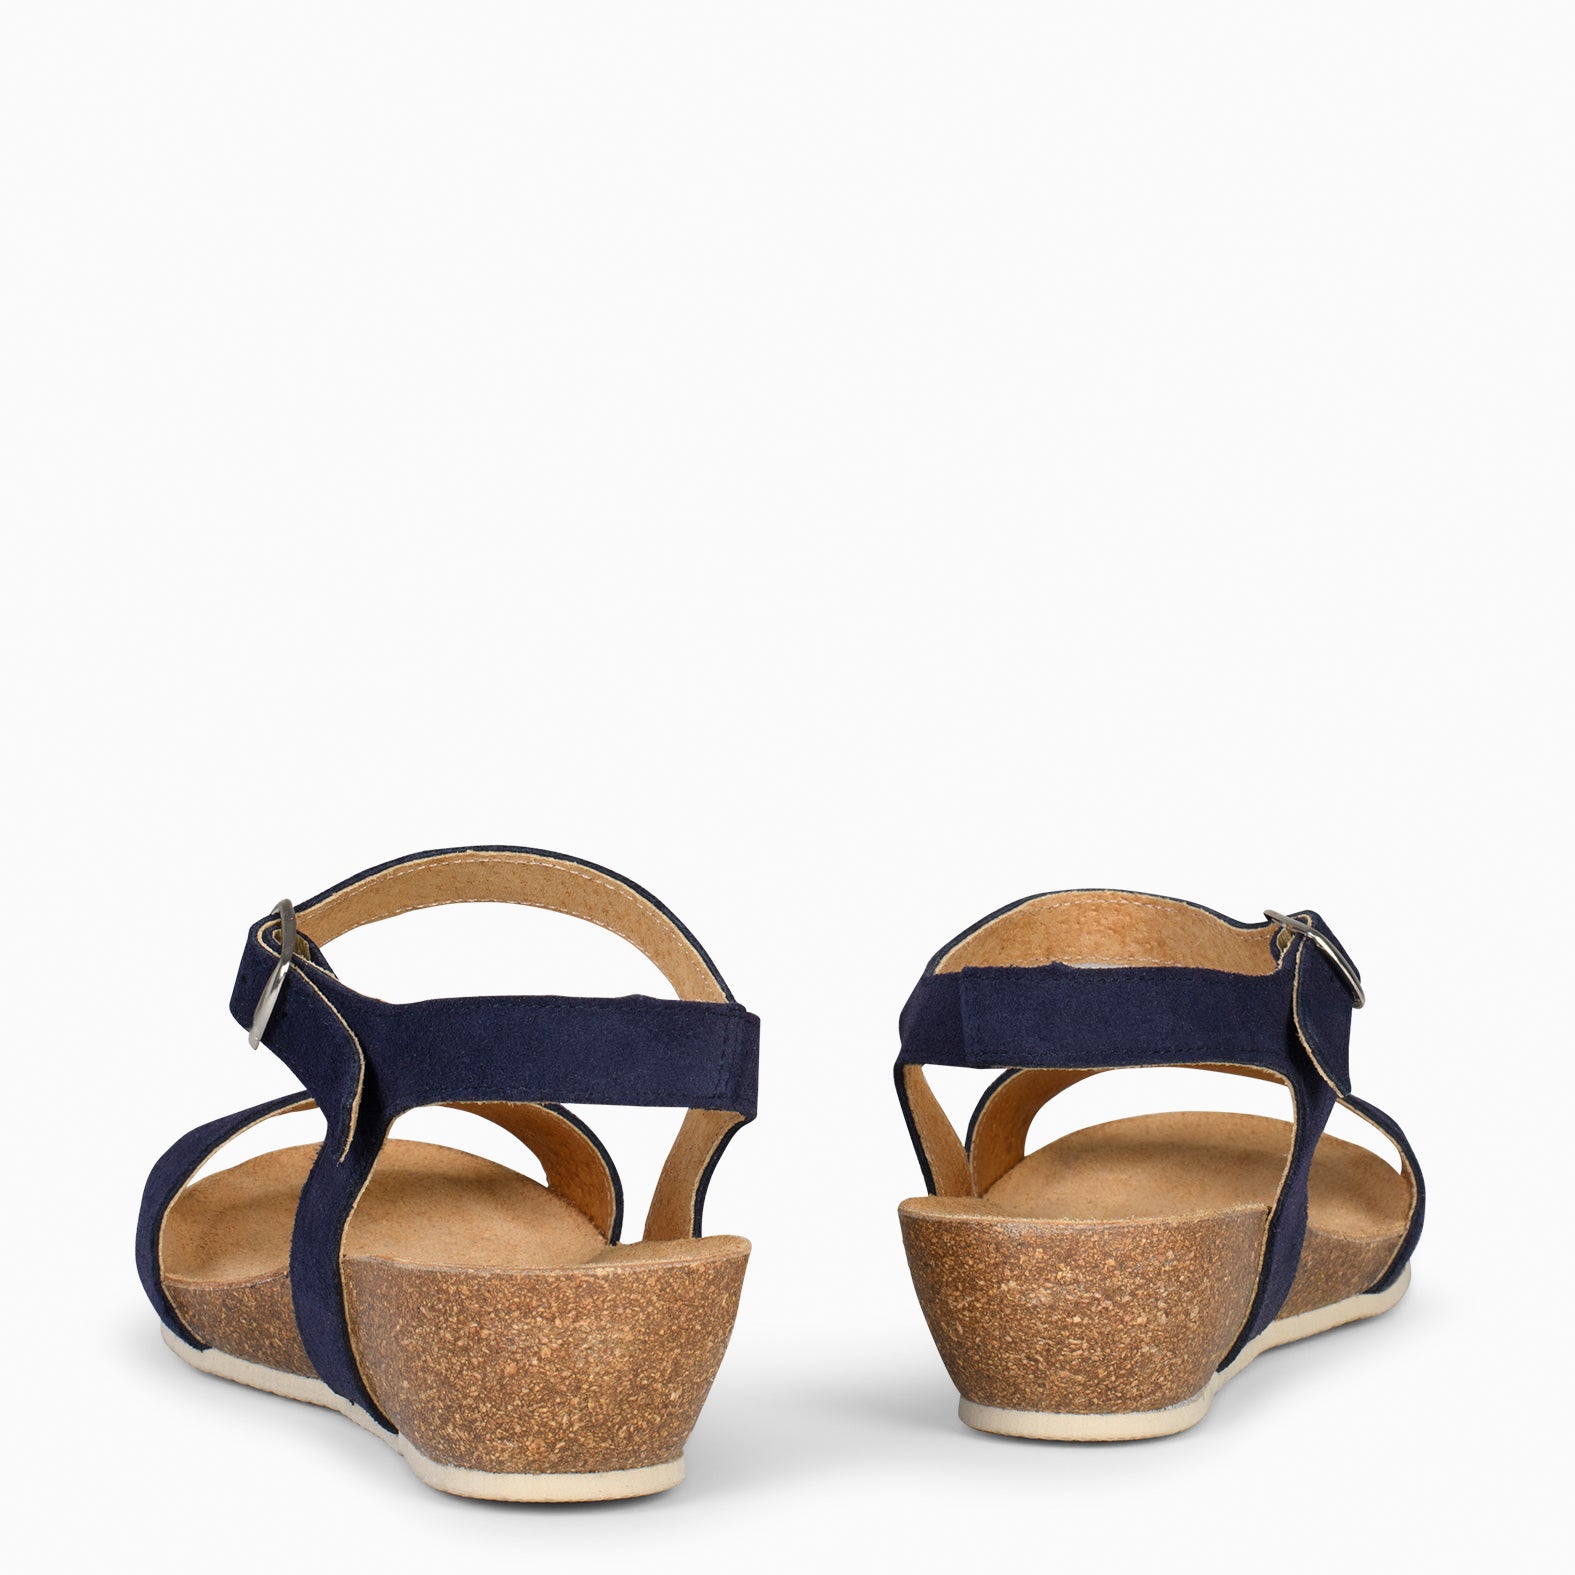 OAK - BLUE BIO Suede wedge sandals 